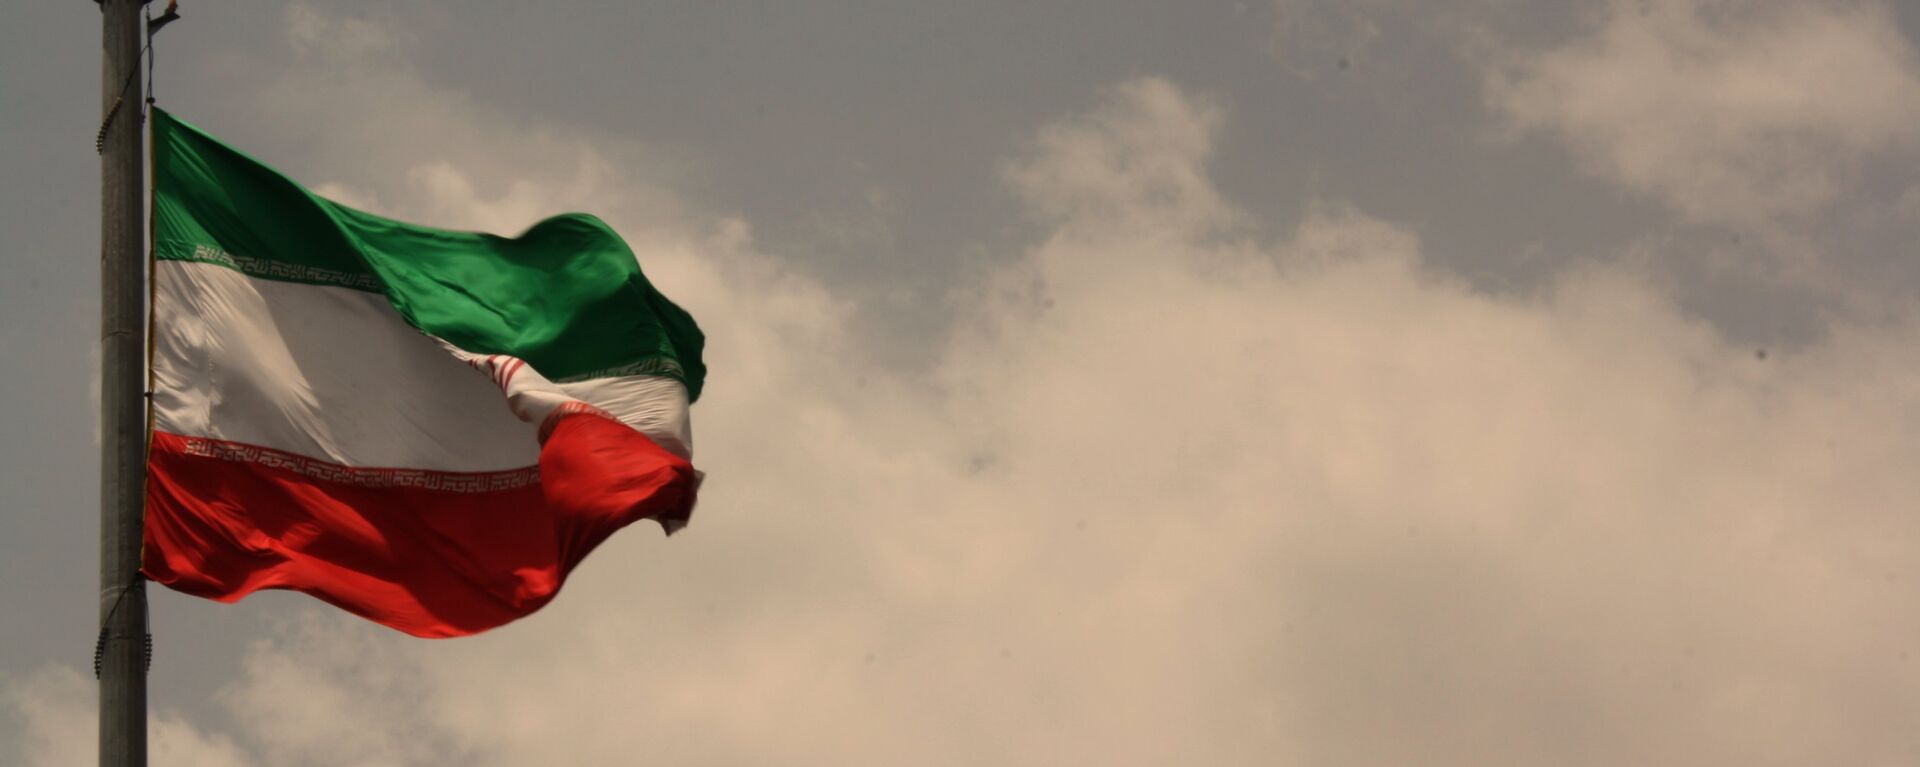 La bandera de Irán - Sputnik Mundo, 1920, 12.04.2021